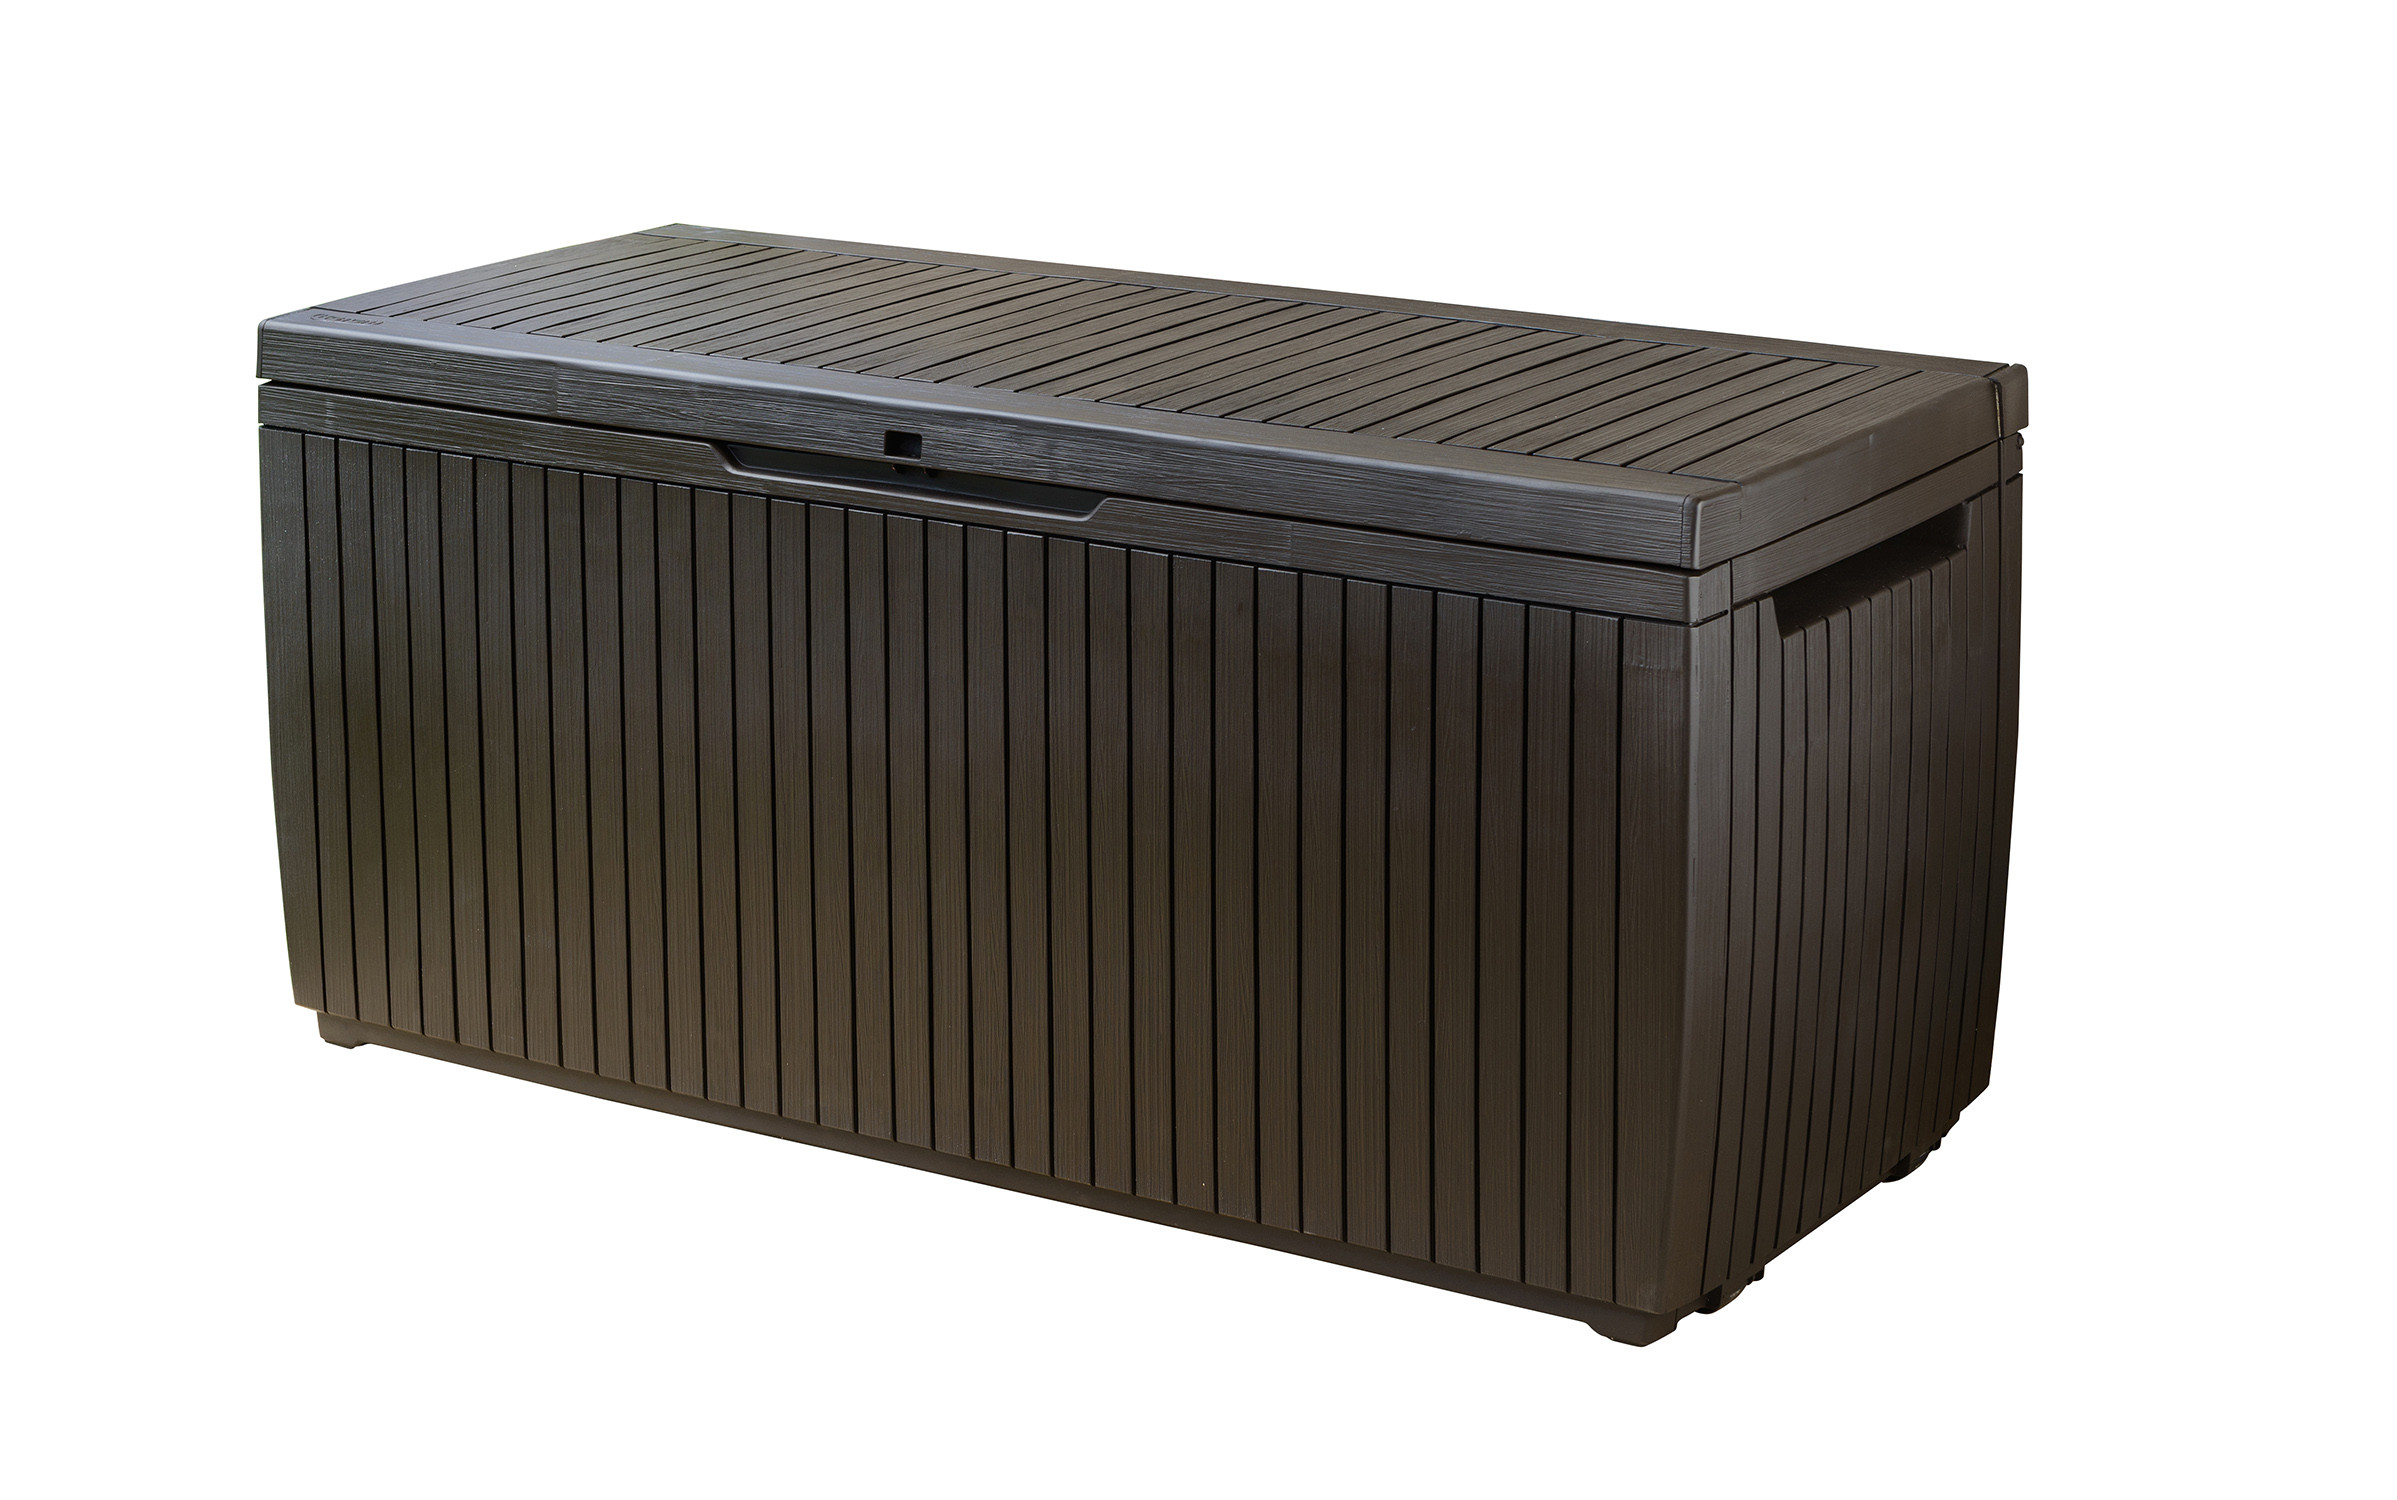 Storage Bench Deck Box
 Keter Springwood 80 Gallon Plastic Deck Box Resin Patio